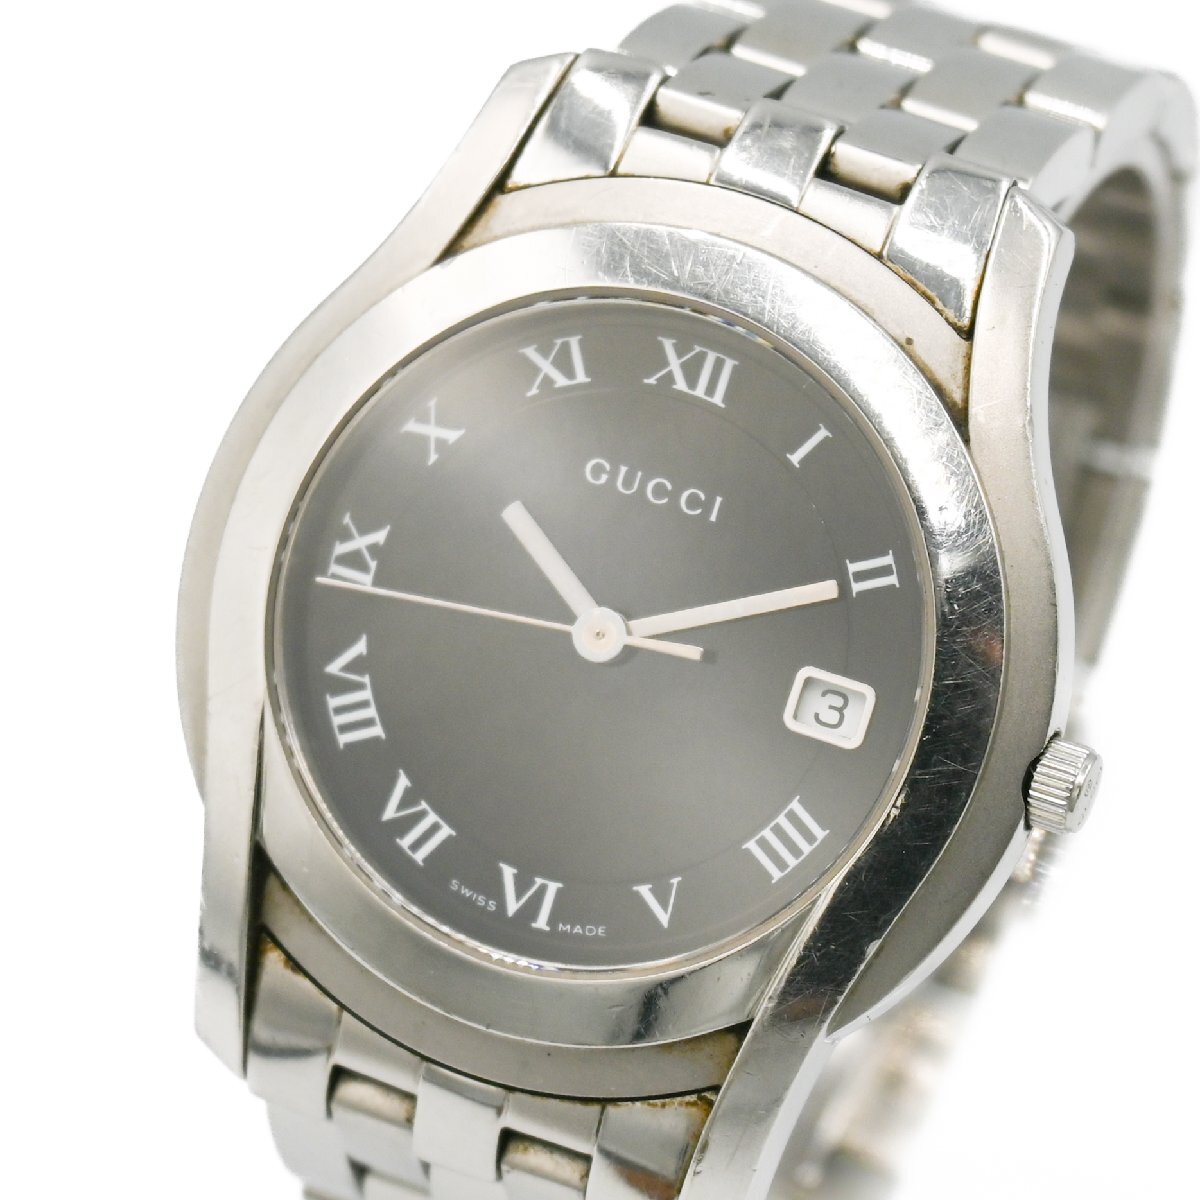 1 иен работа с футляром GUCCI Gucci 5500M QZ кварц Date 3 стрелки чёрный циферблат серебряный SS мужские наручные часы раунд бренд 343120240507